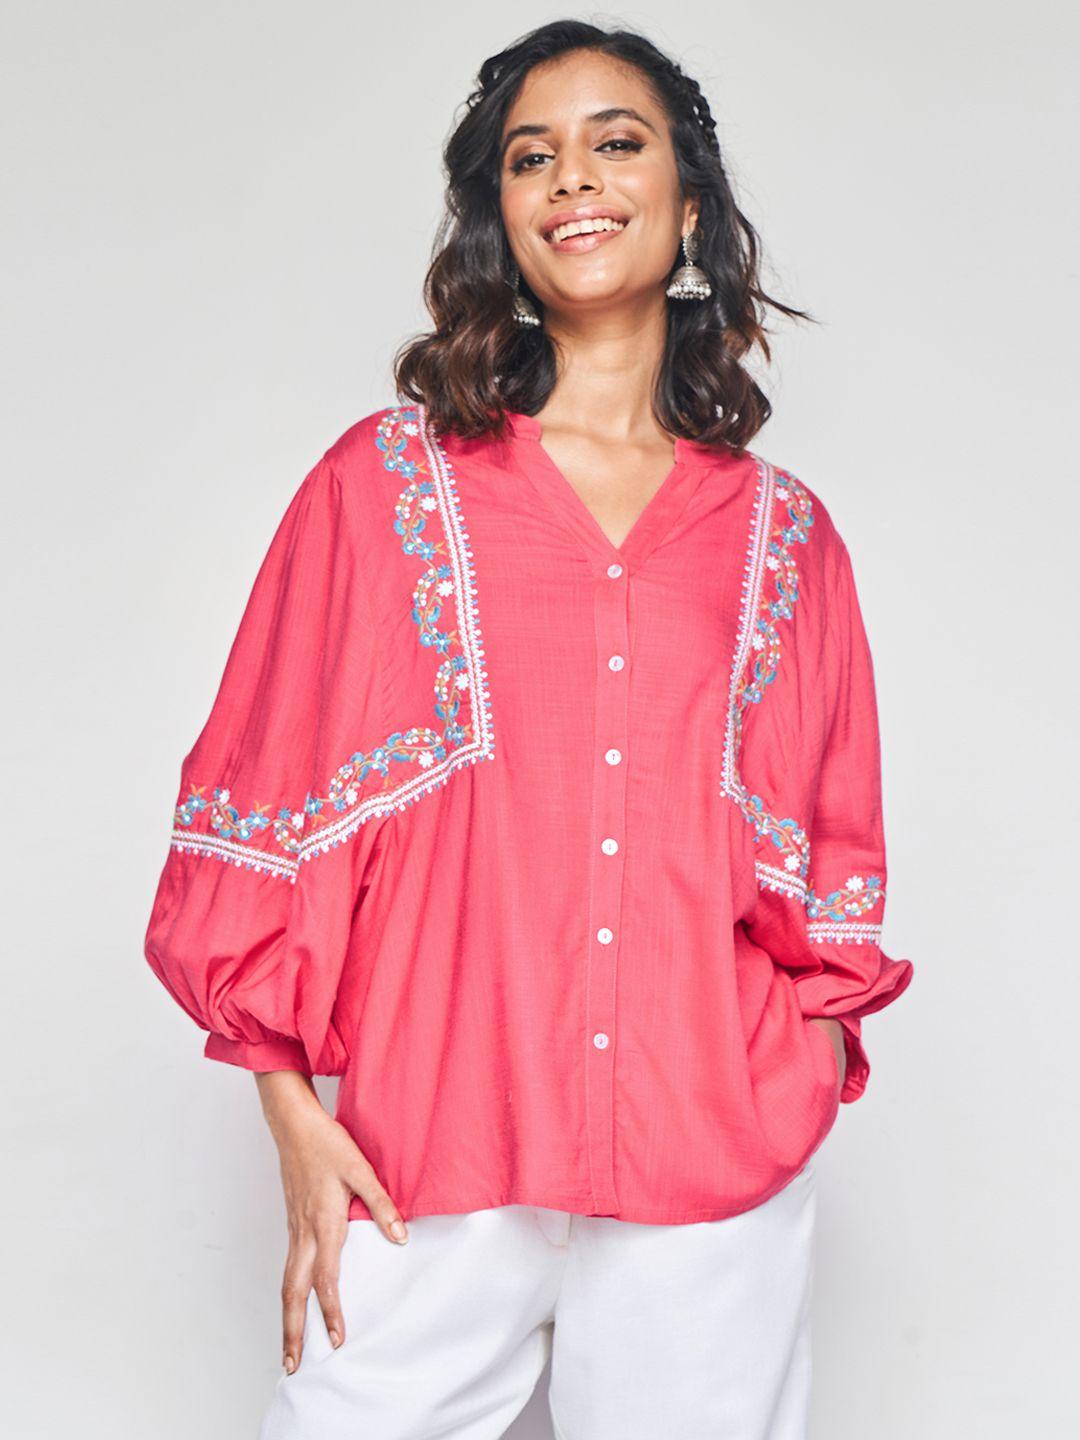 global desi floral embroidered mandarin collar shirt style top